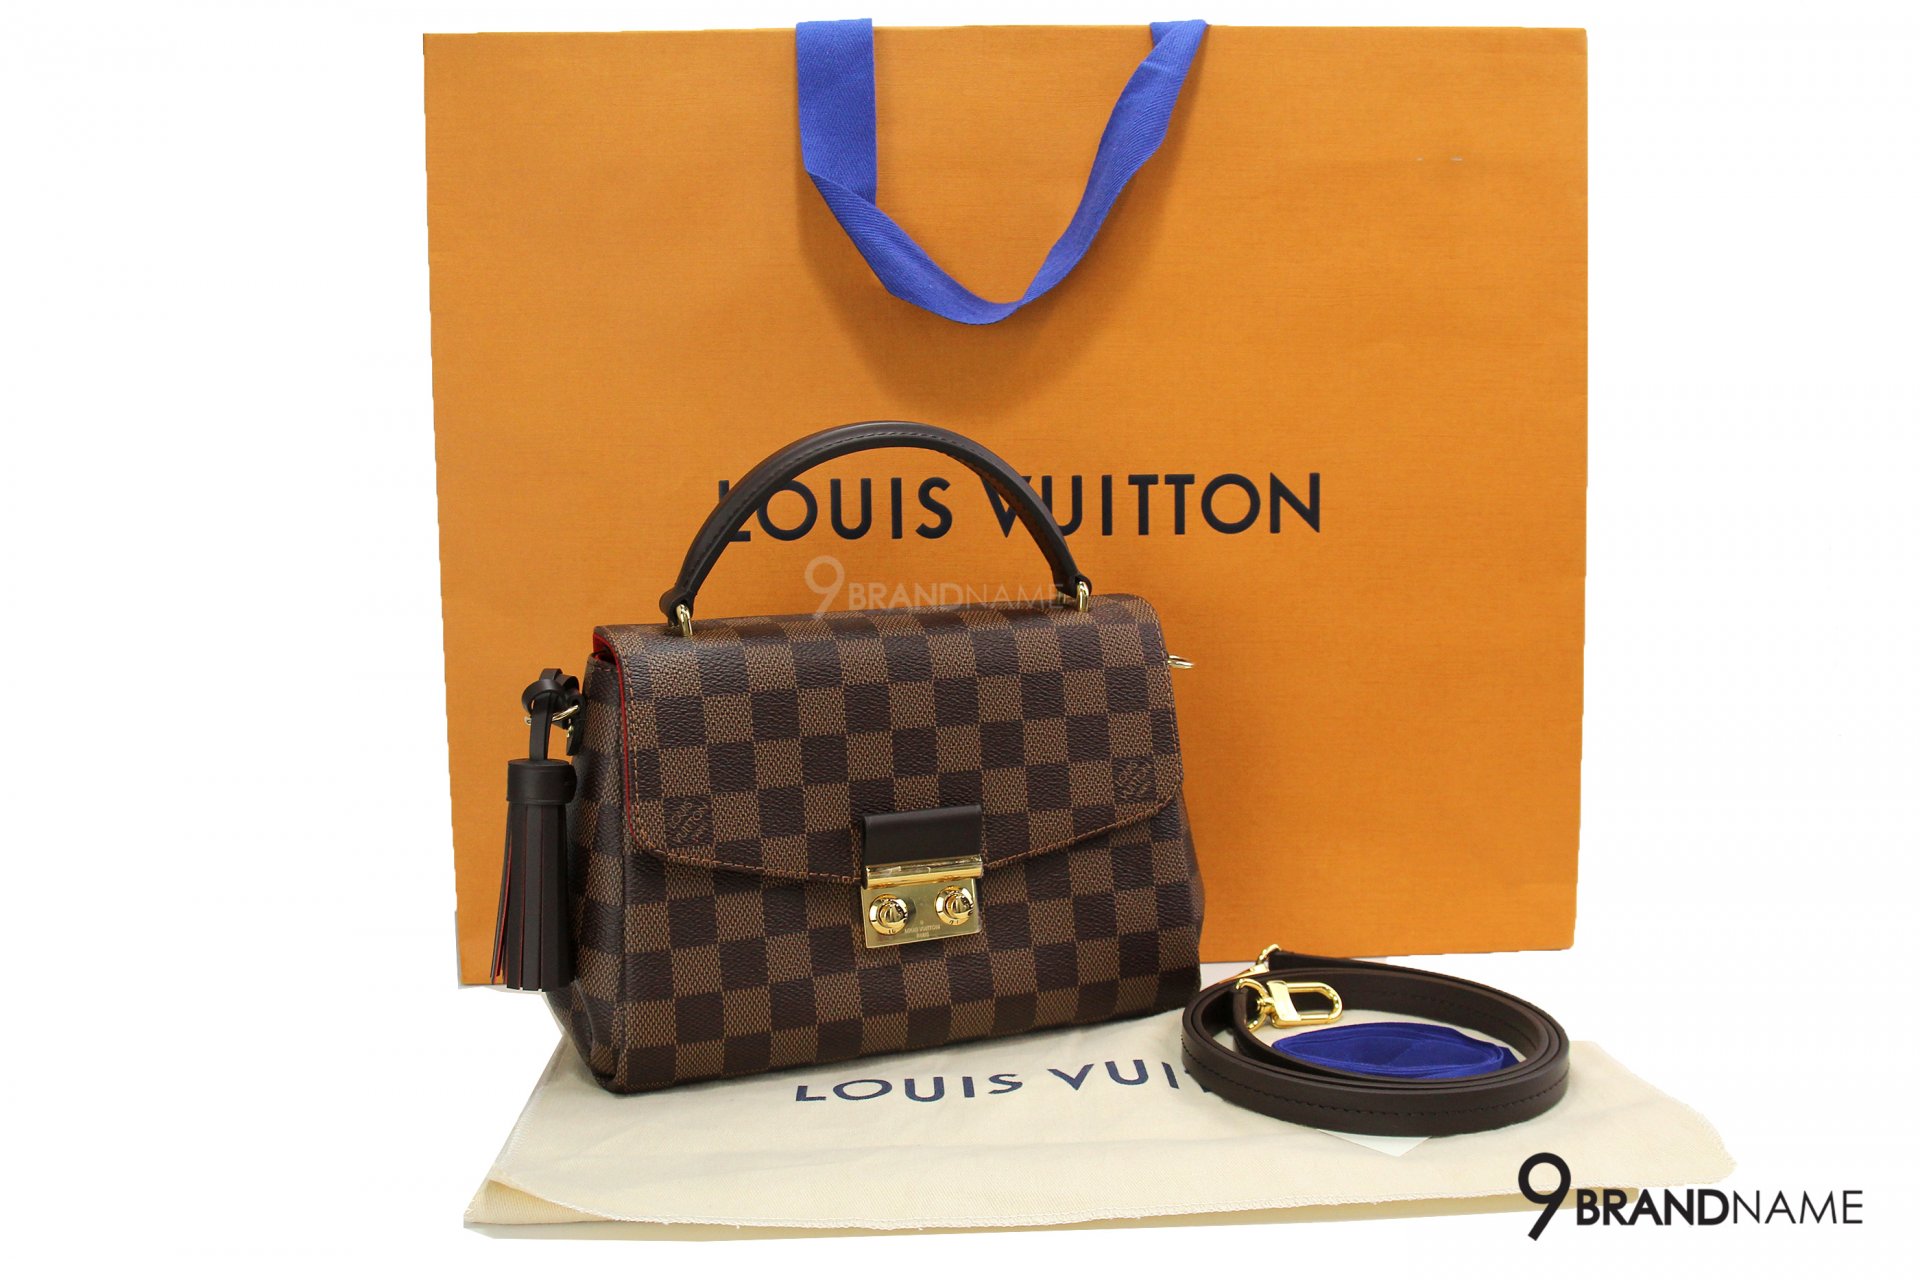 Louis Vuitton Croisette N53000 Damier - 9brandname